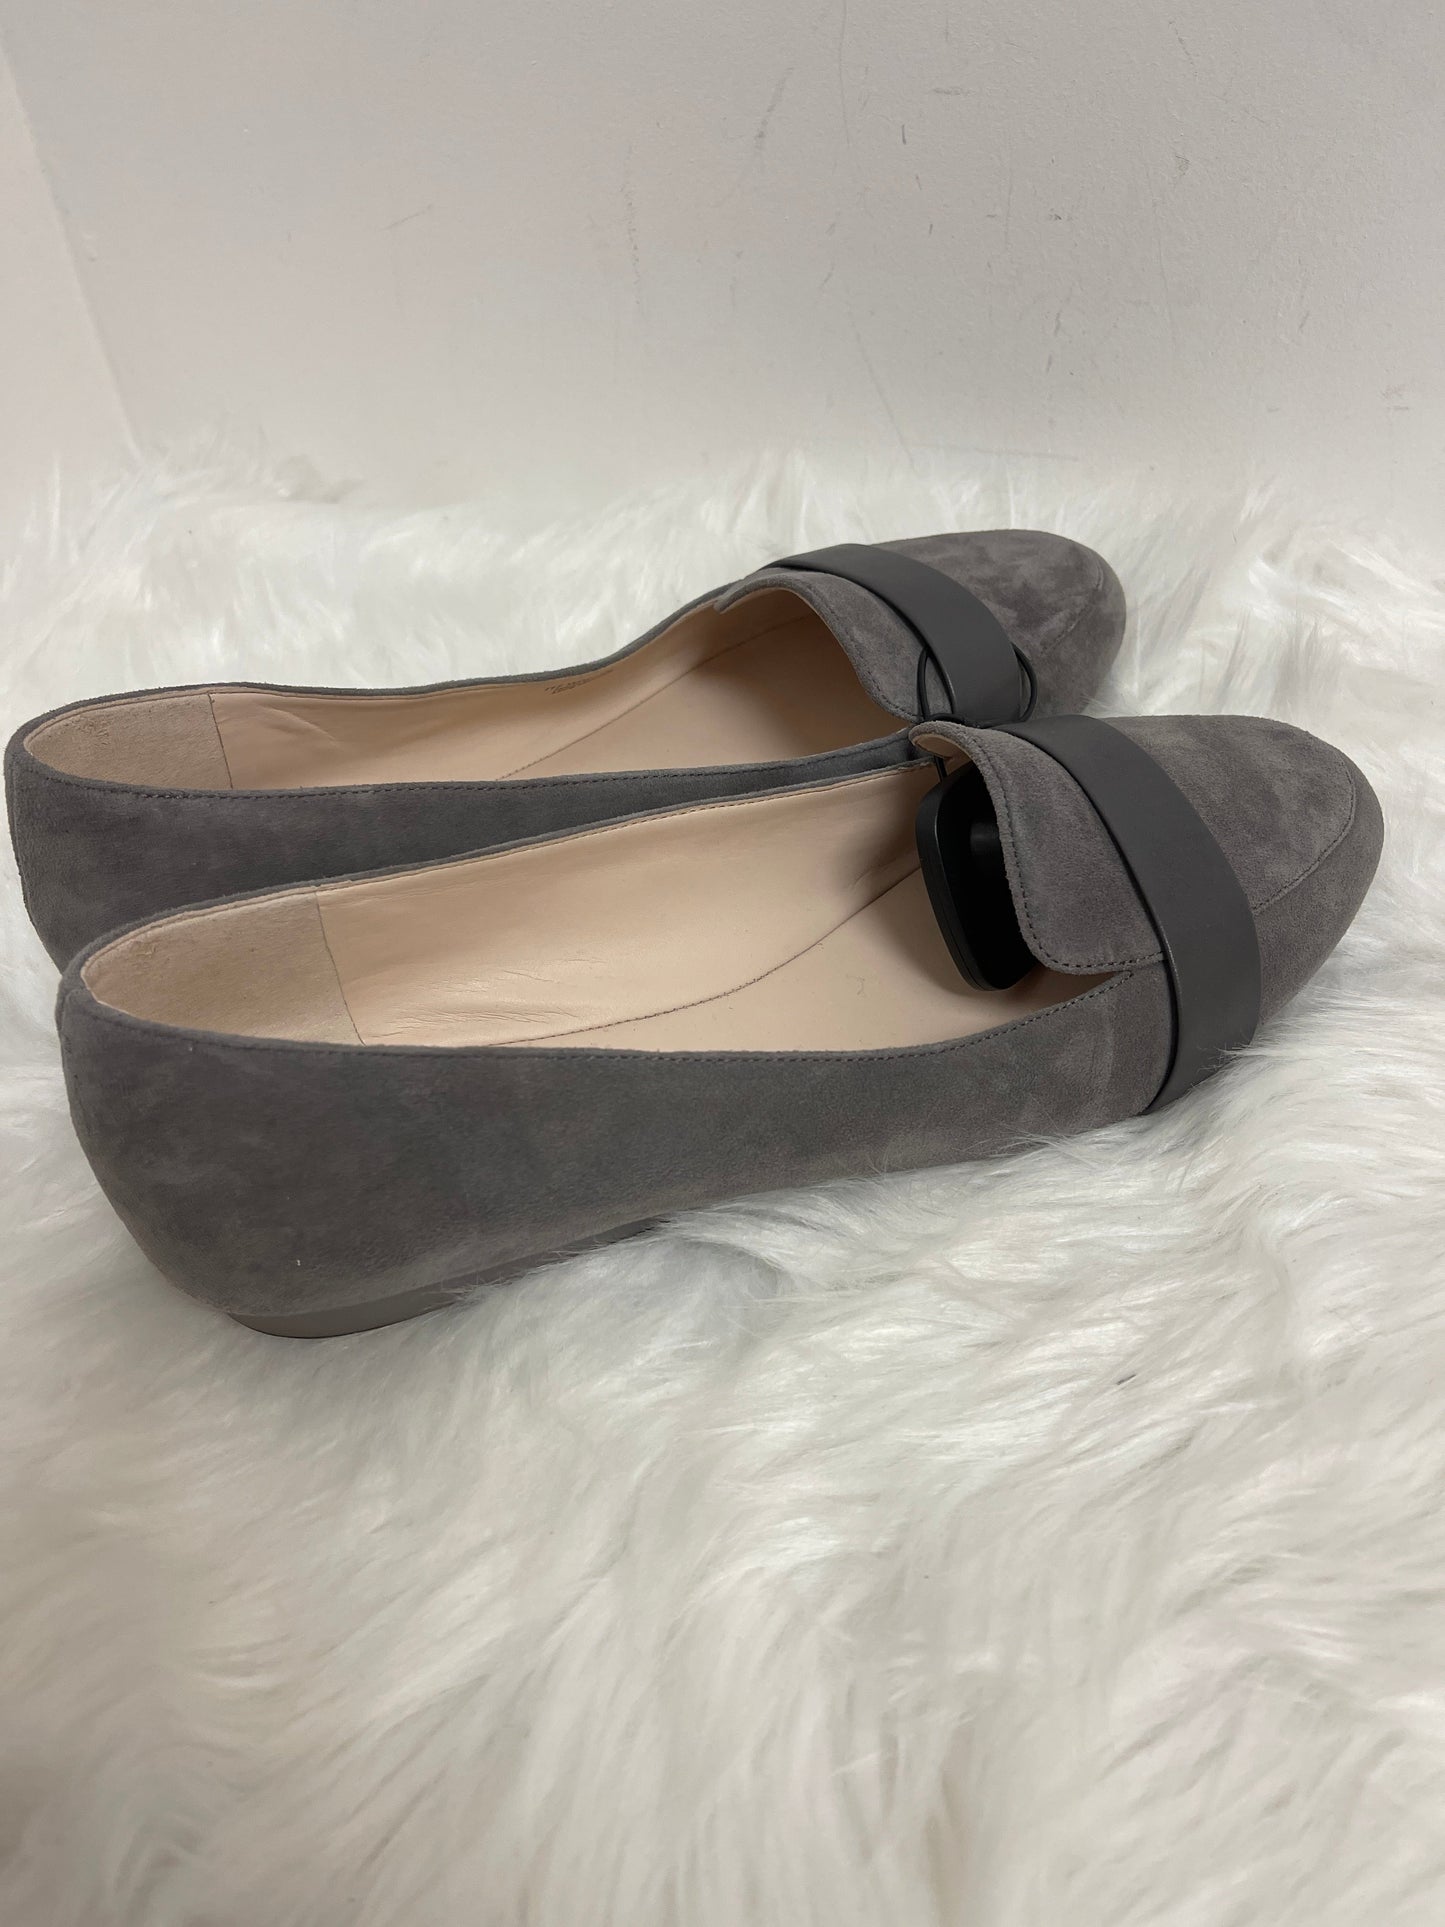 Black & Grey Sandals Flats Cole-haan, Size 8.5